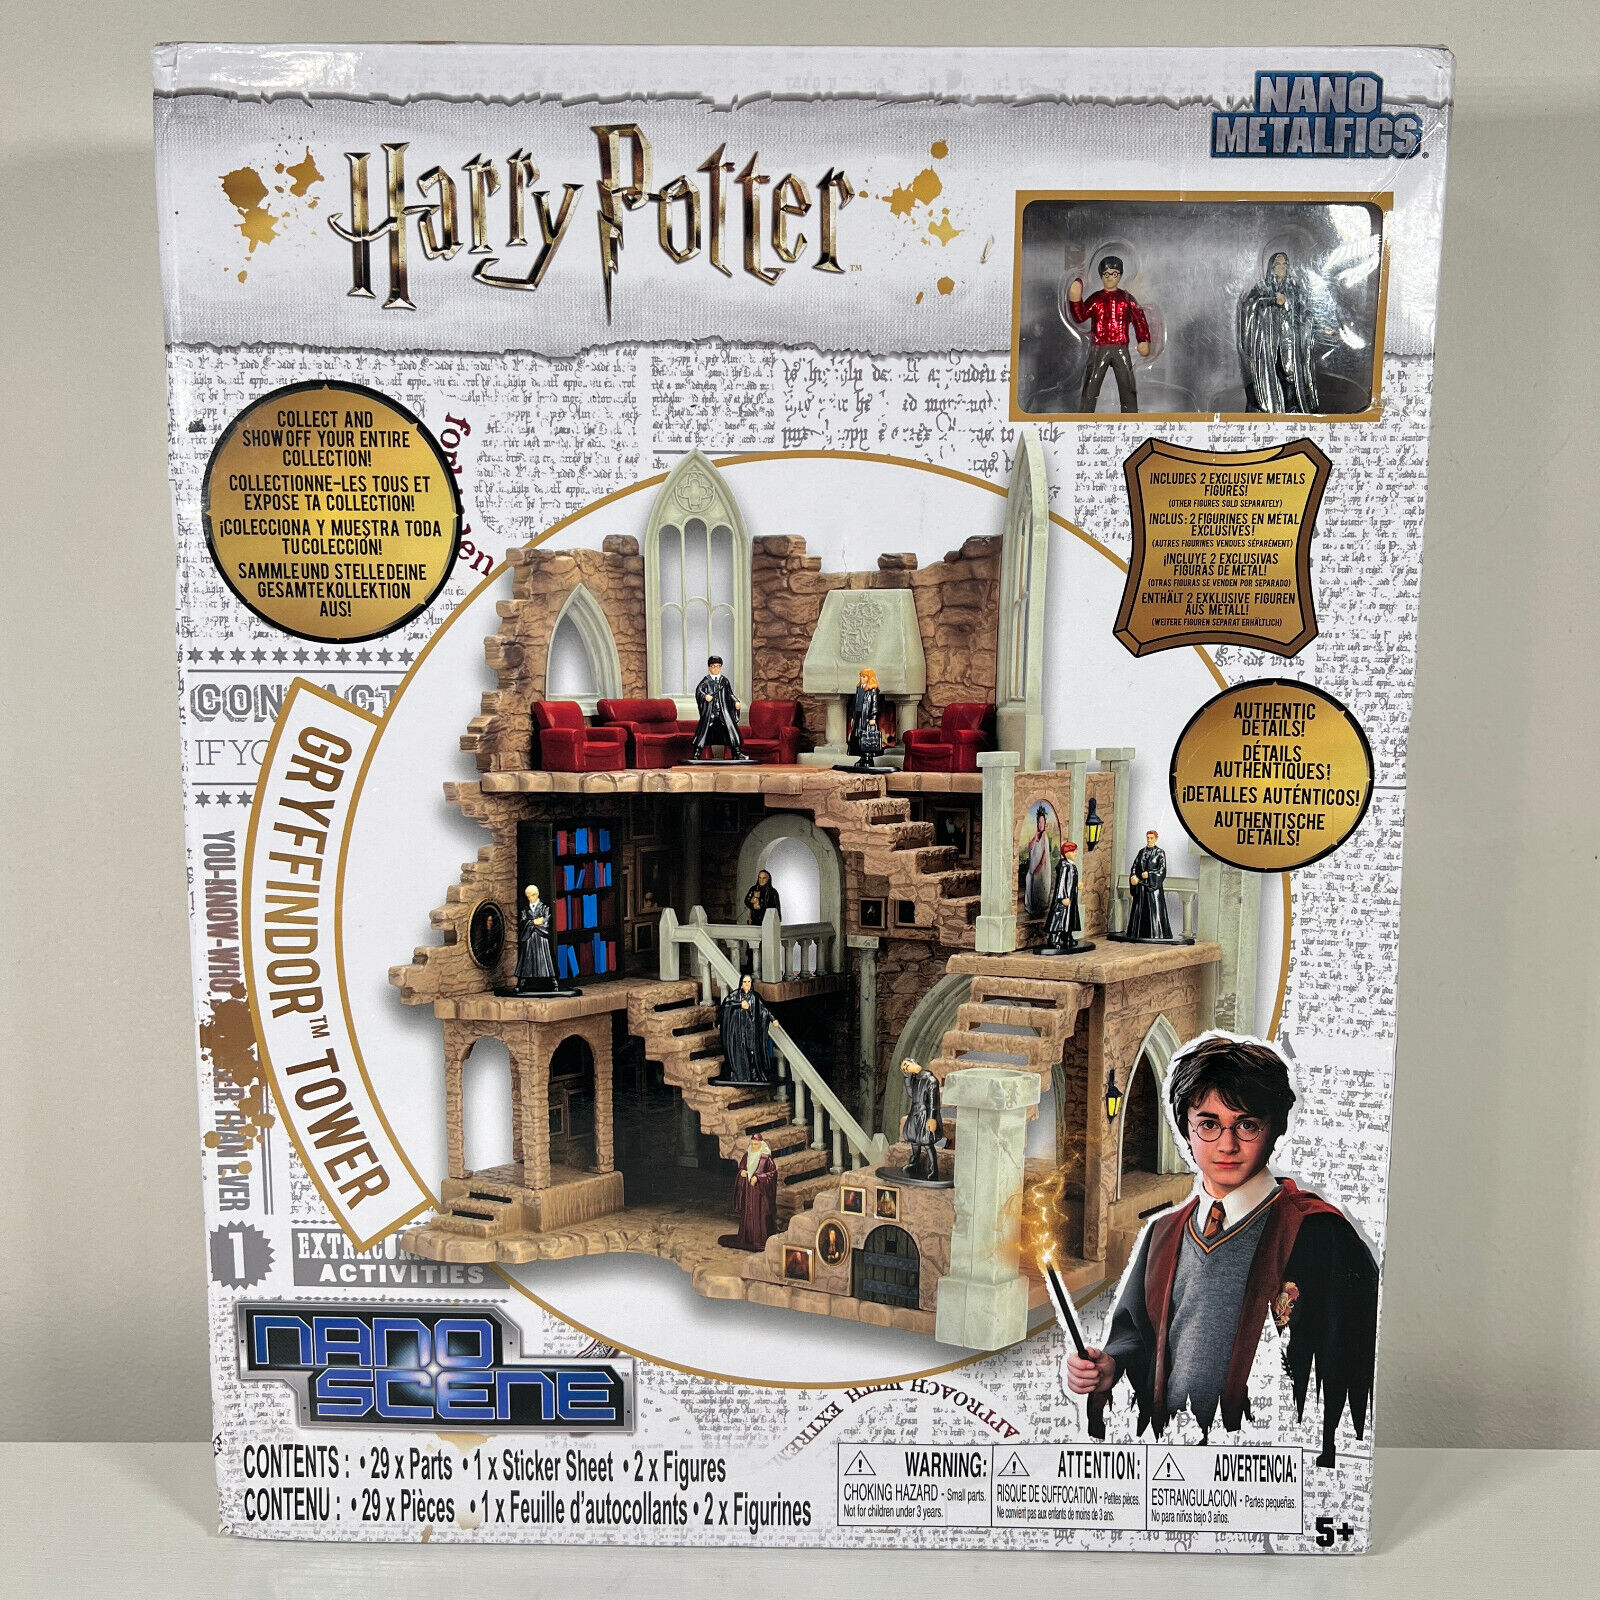 Harry Potter Nano Scene Gryffindor Tower with Nano MetalFigs from Jada Toys